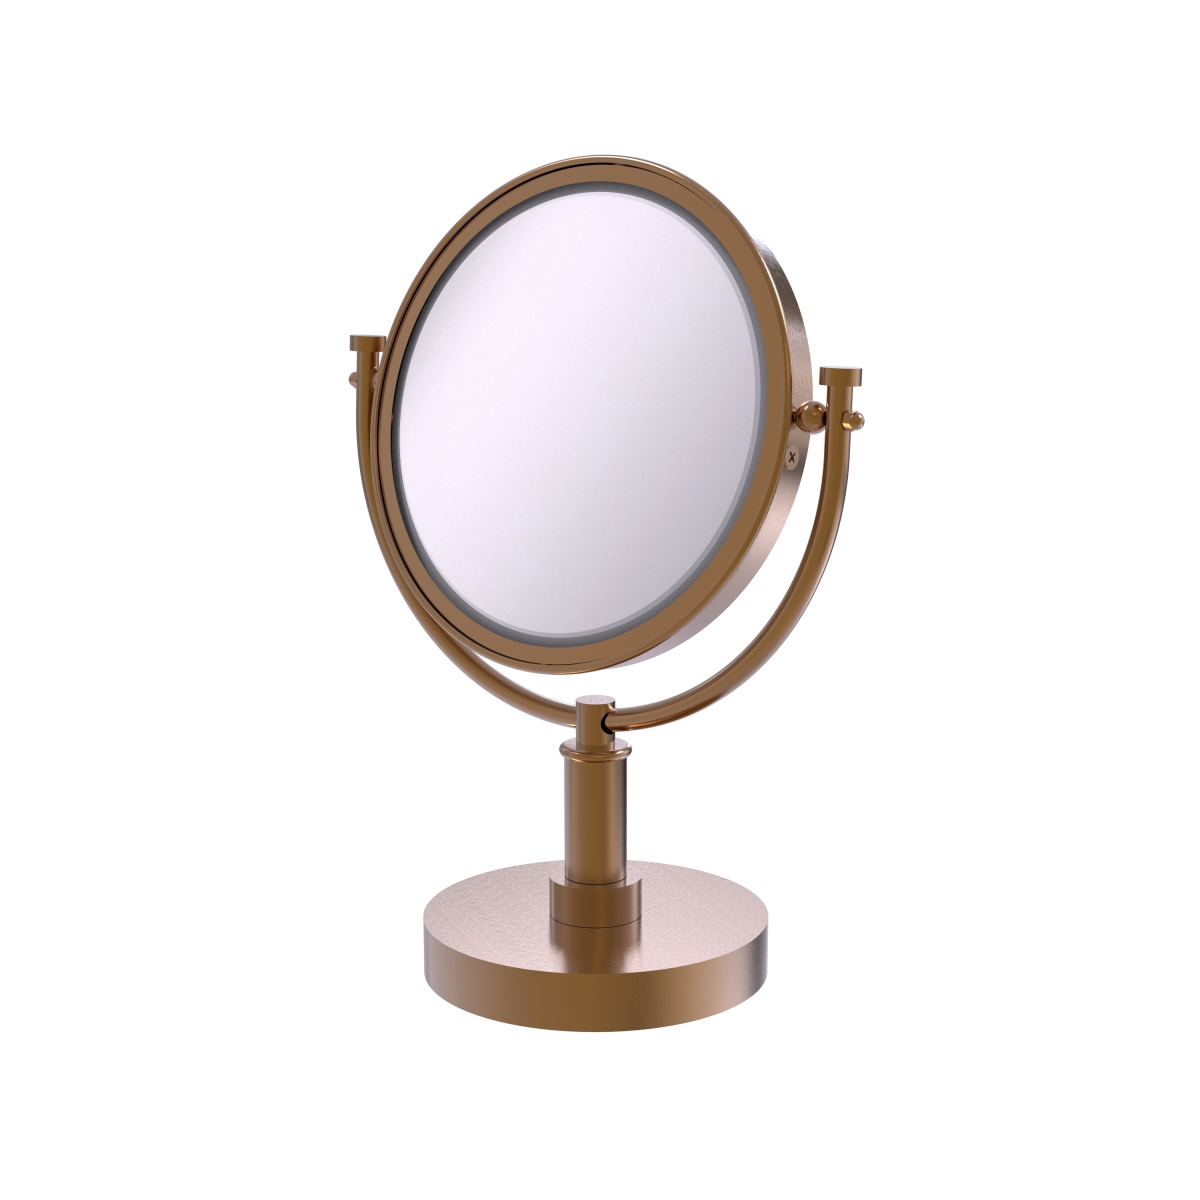 Dm-4-3x-bbr 8 In. Vanity Top Make-up Mirror 3x Magnification, Brushed Bronze